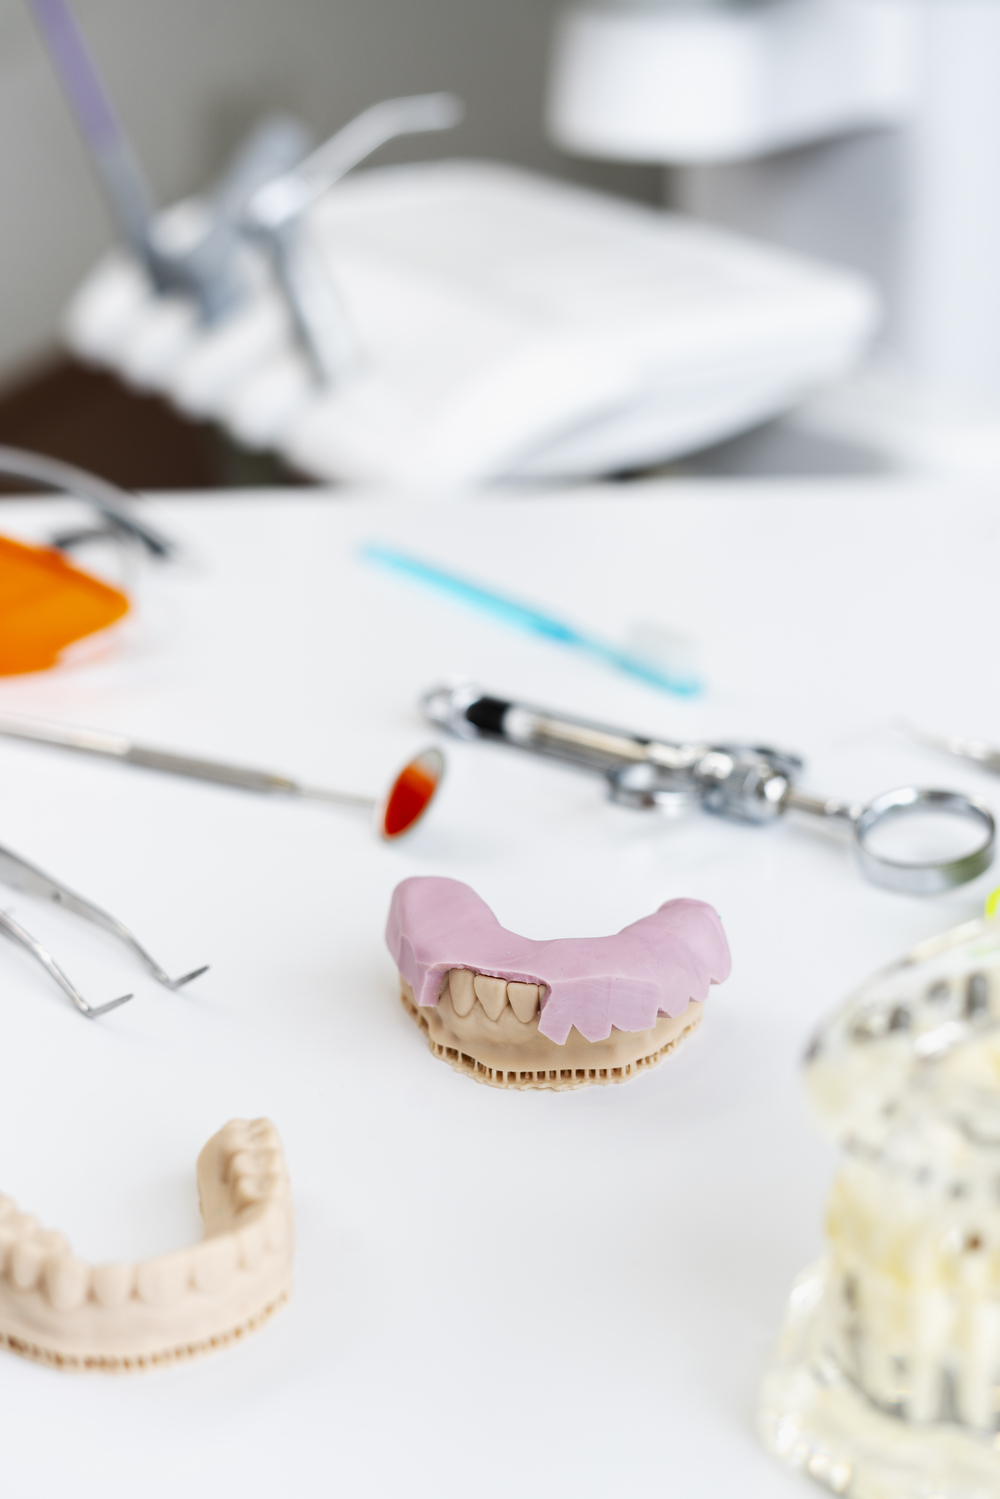 Dental office, cast of teeth, false teeth, implants, dental tools on workplace. Modern office medicine. Concept of health care